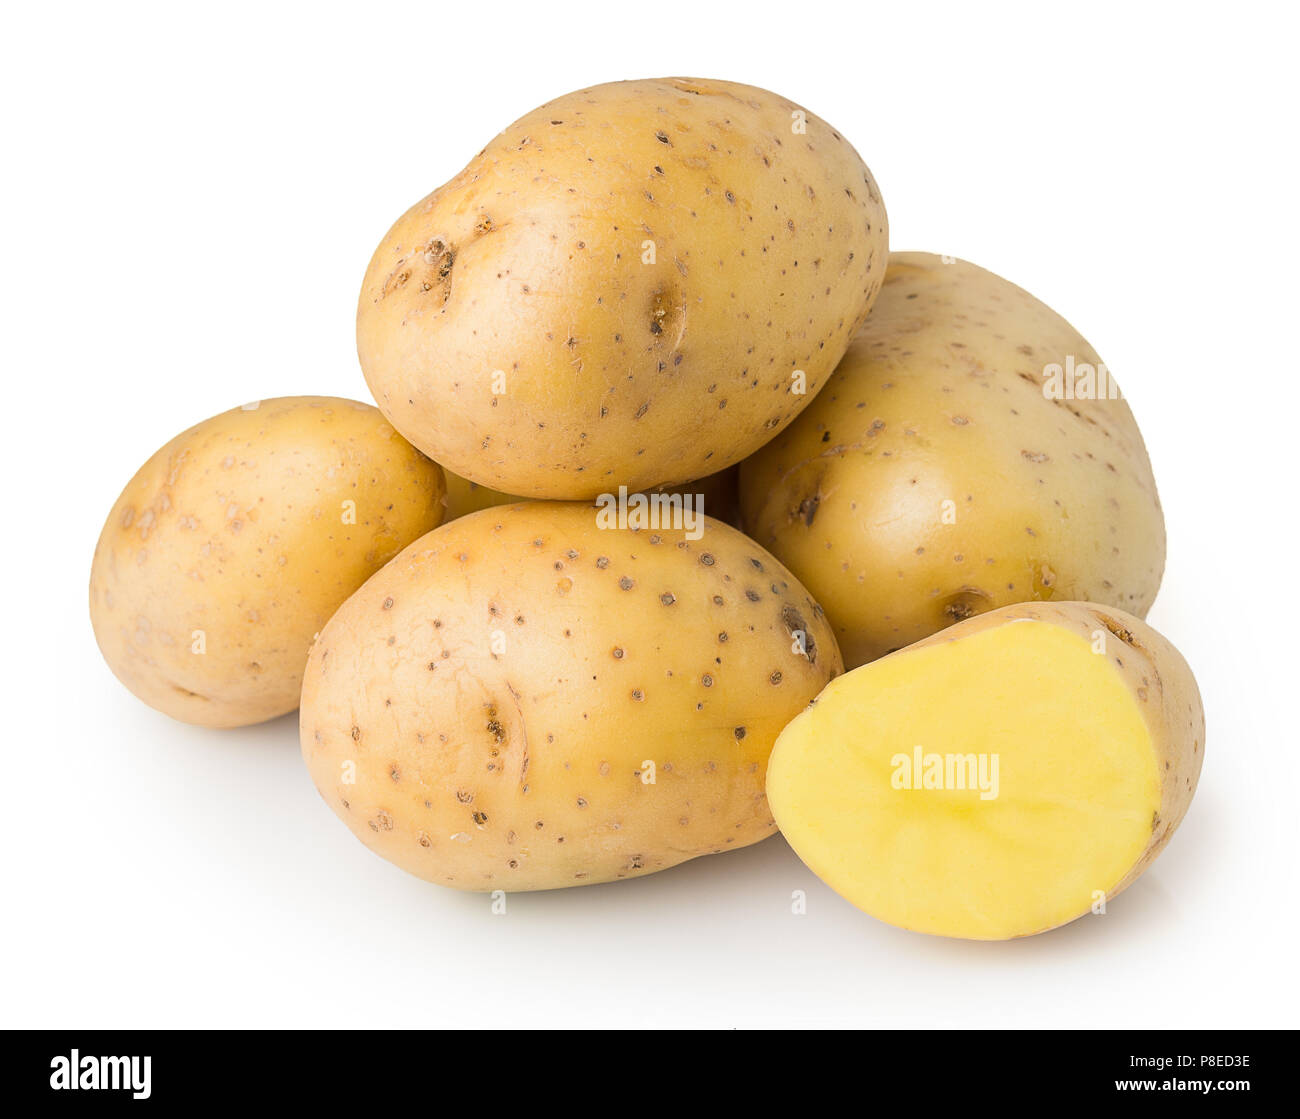 washed potatoes on a white background, isolated Stock Photo